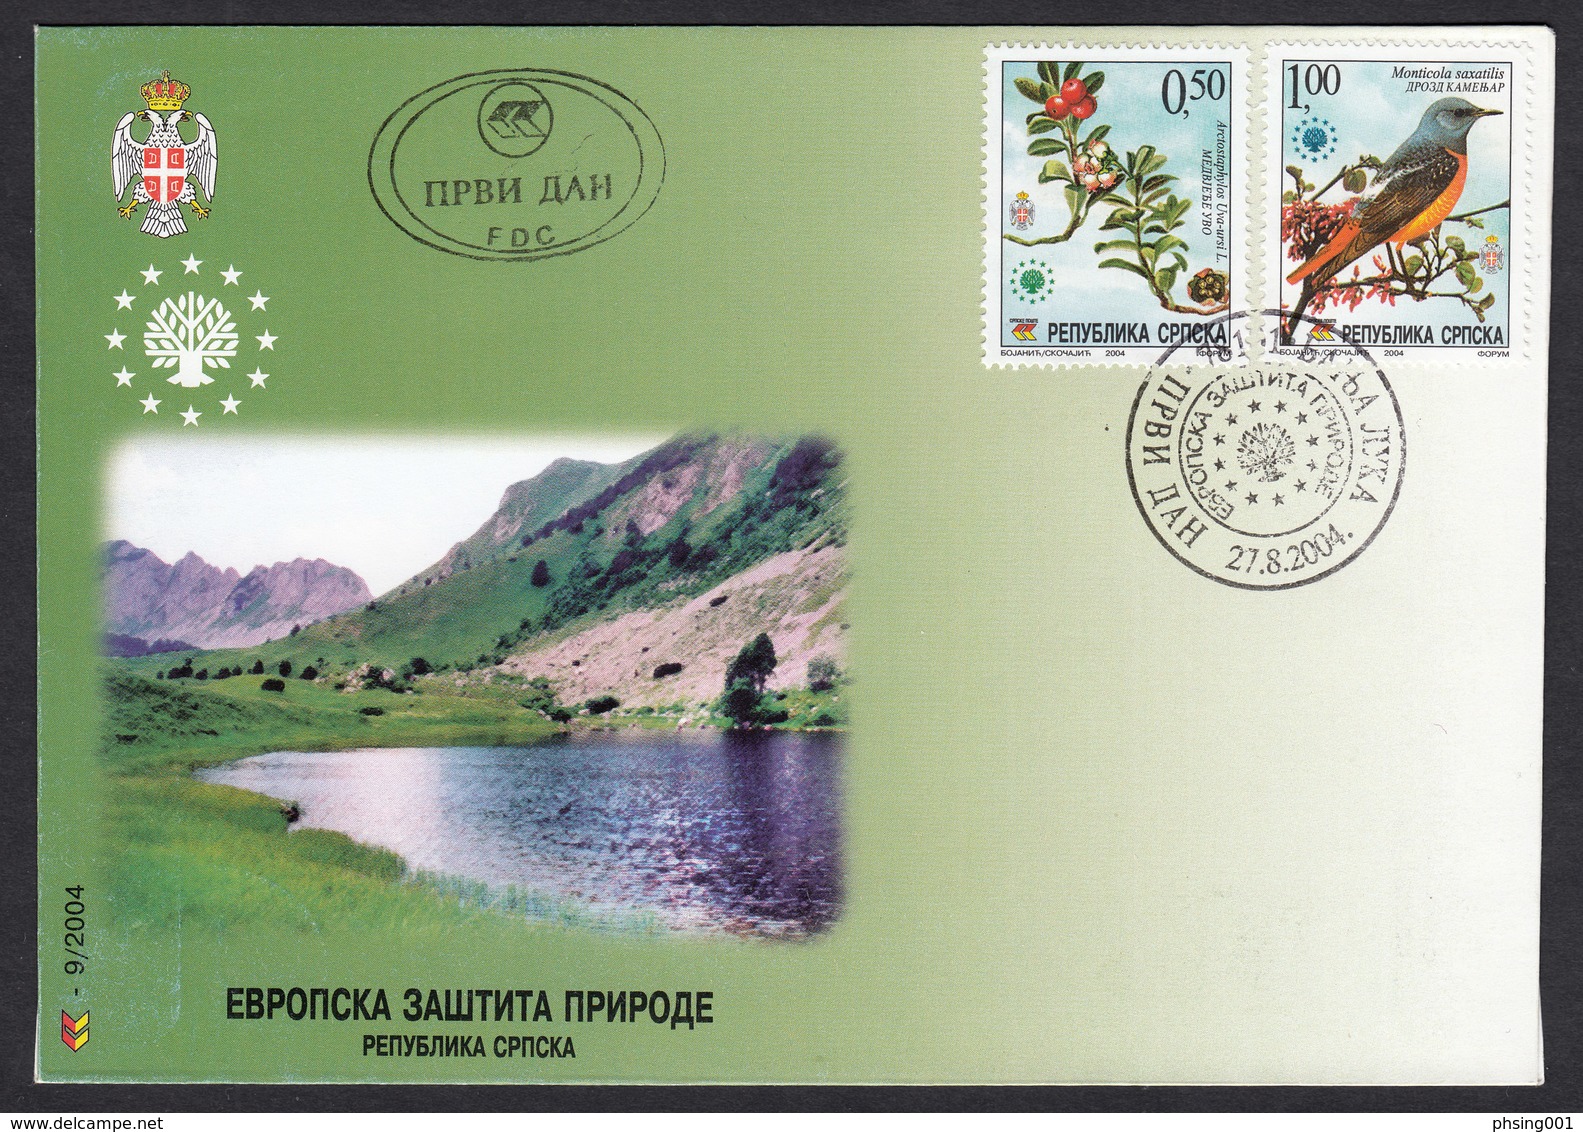 Bosnia Serbia 2004 European Nature Protection, Birds, Fauna, Flowers Set FDC - Bosnia And Herzegovina